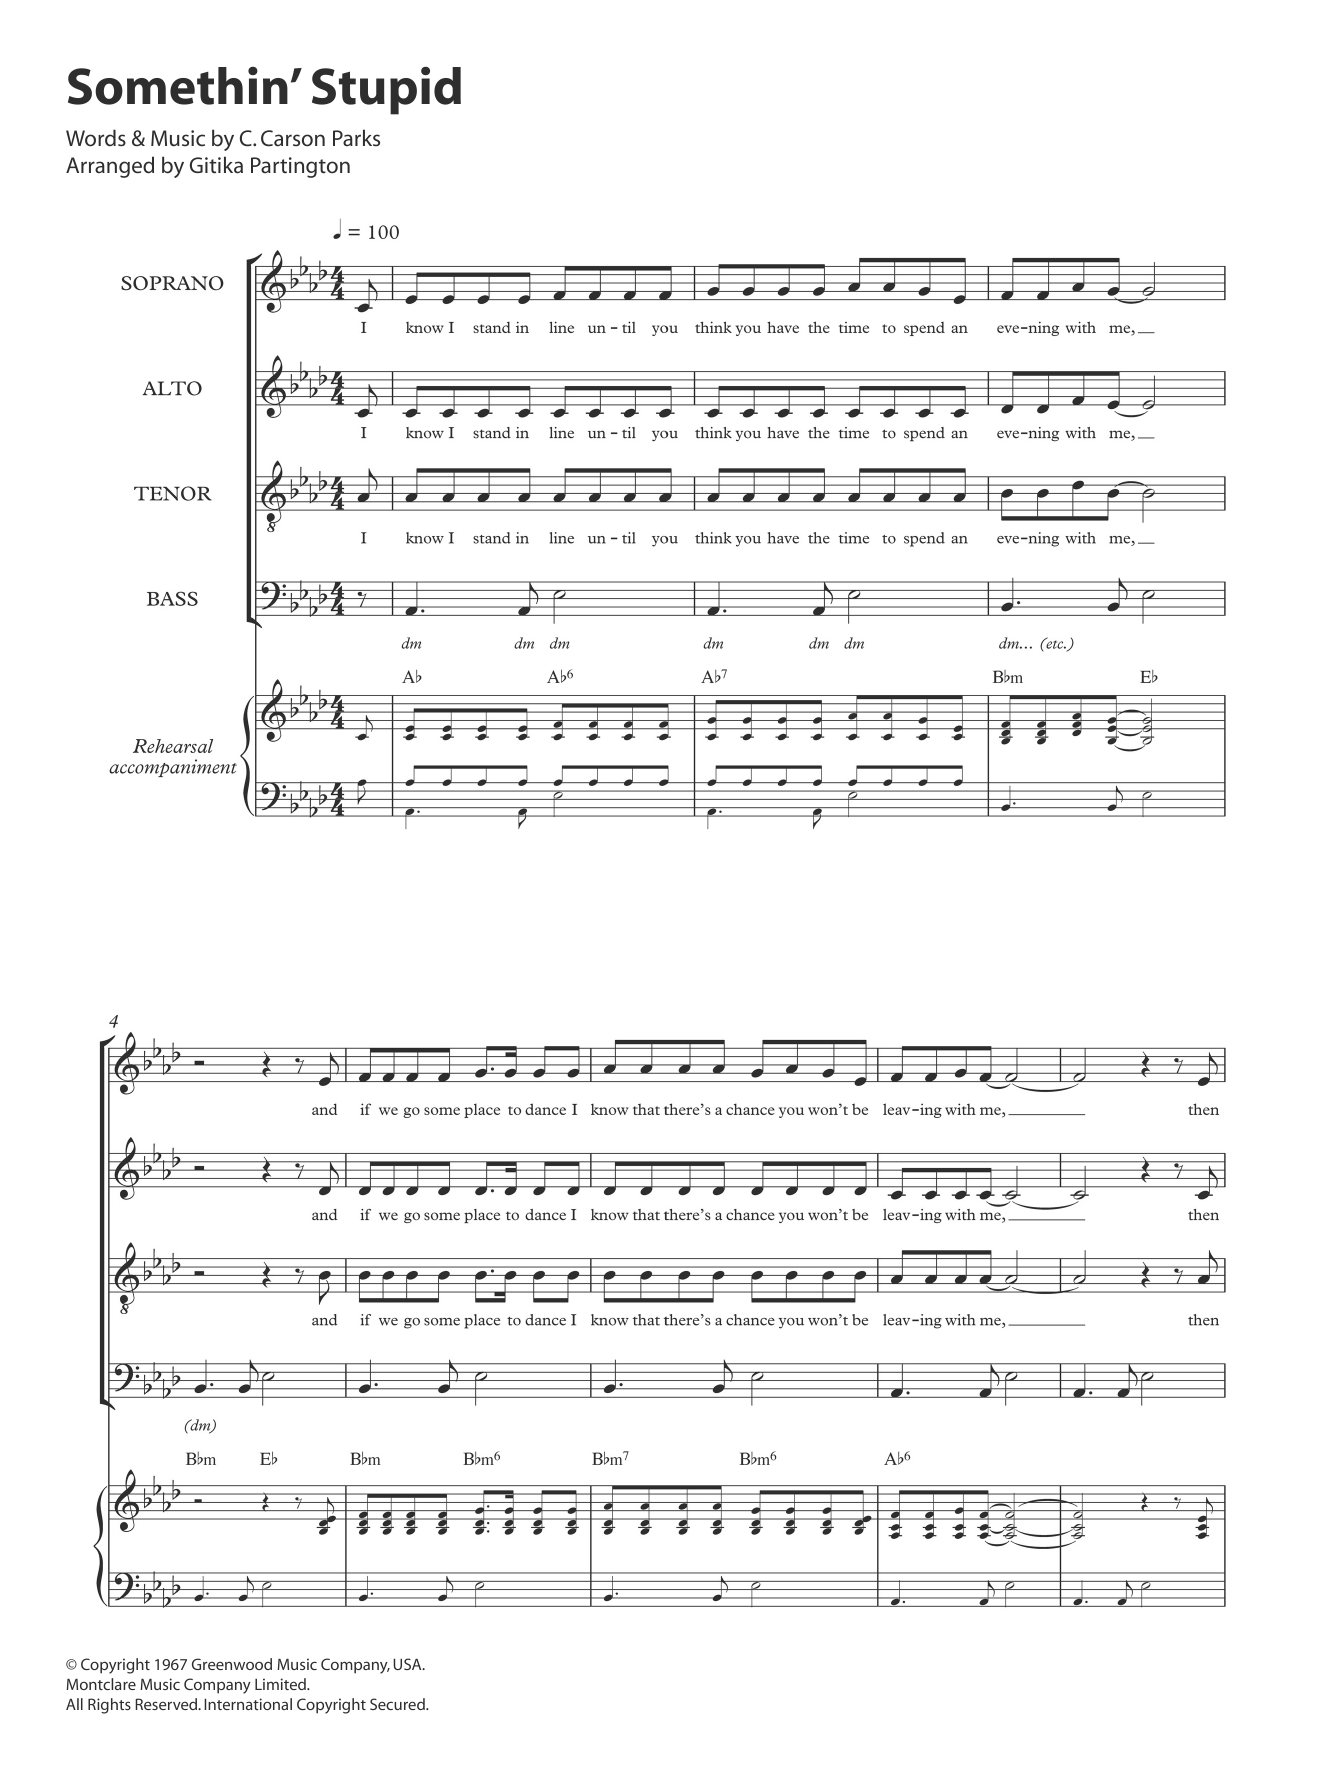 Frank Sinatra Somethin' Stupid (arr. Gitika Partington) sheet music notes and chords. Download Printable PDF.